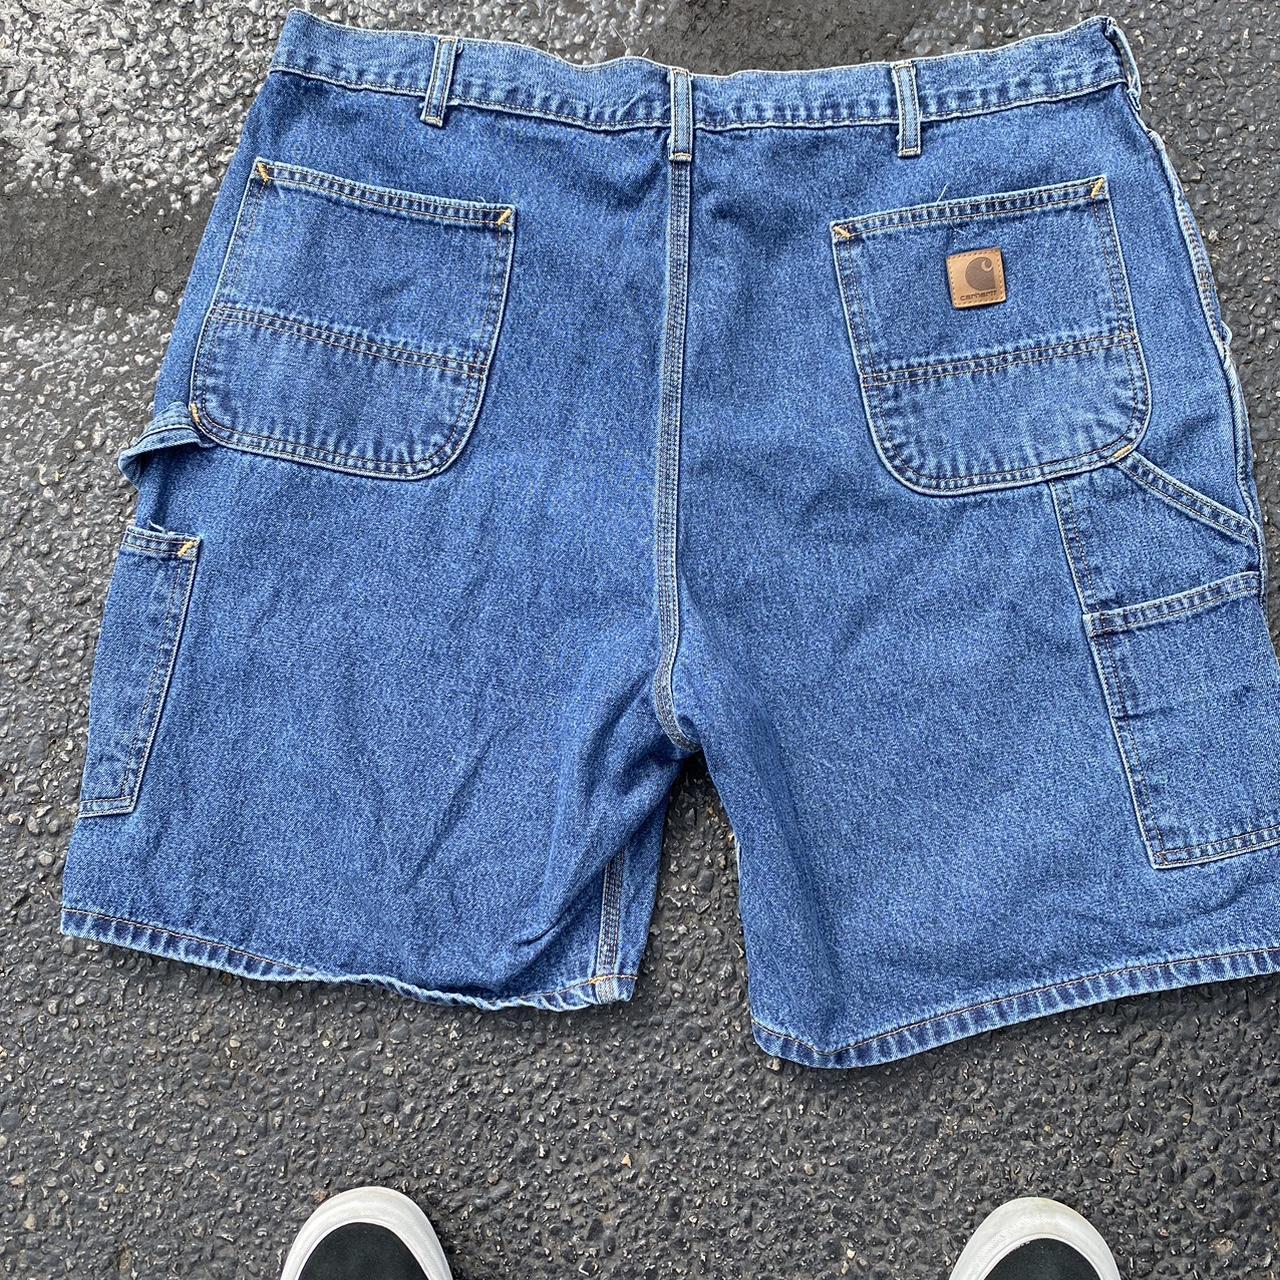 Carhartt Men's Blue Jeans | Depop